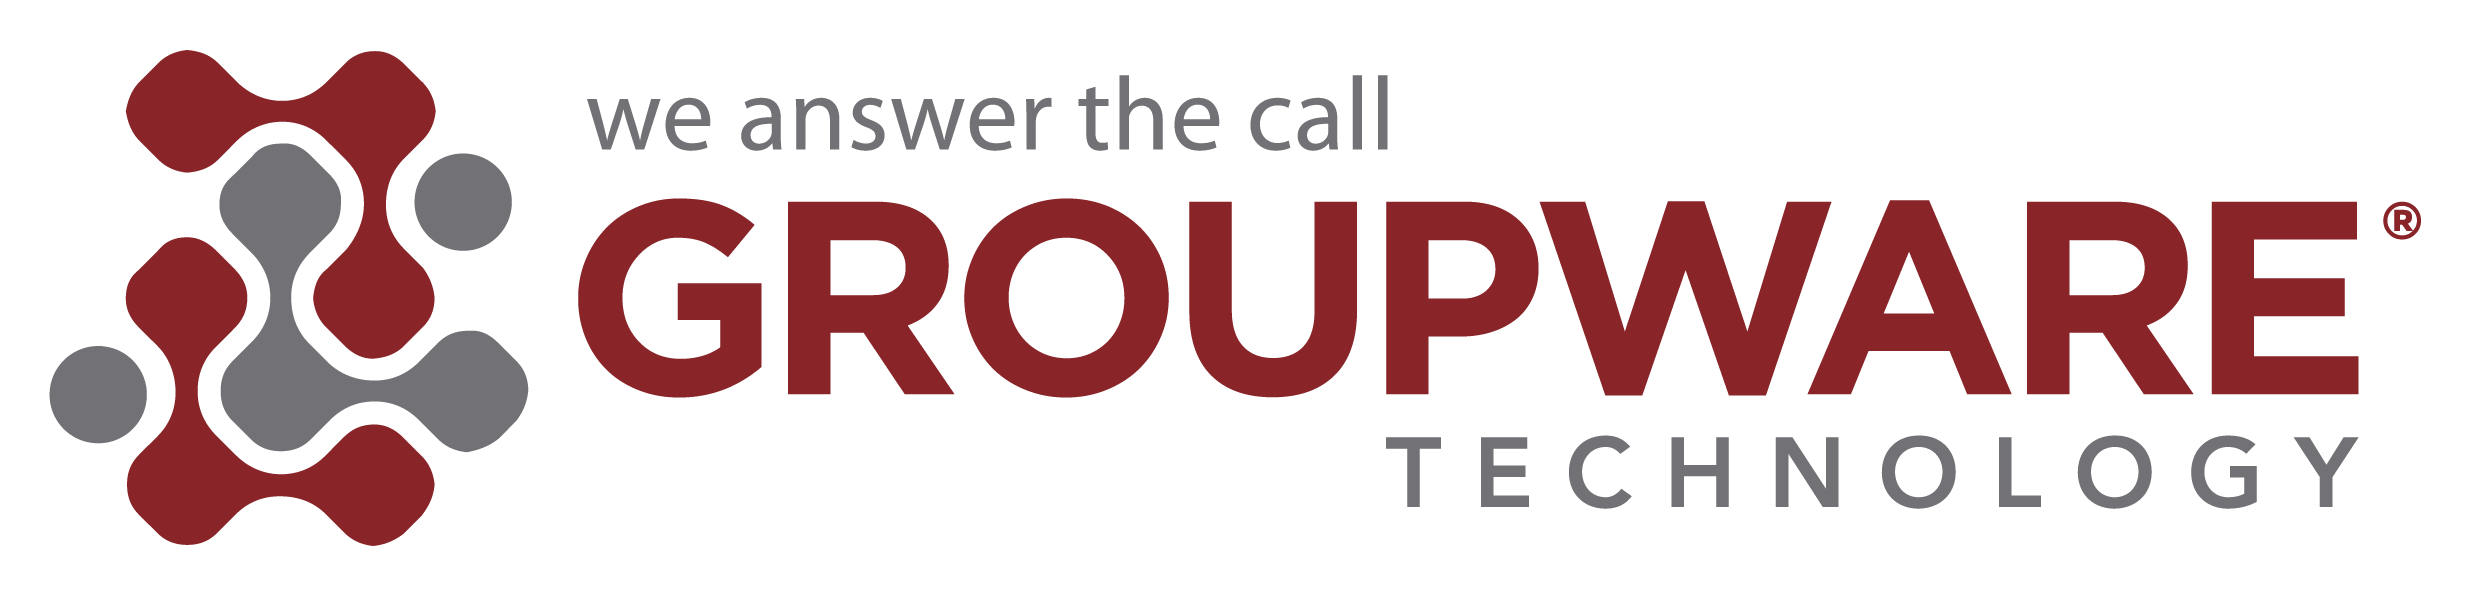 Groupware Technology Logo